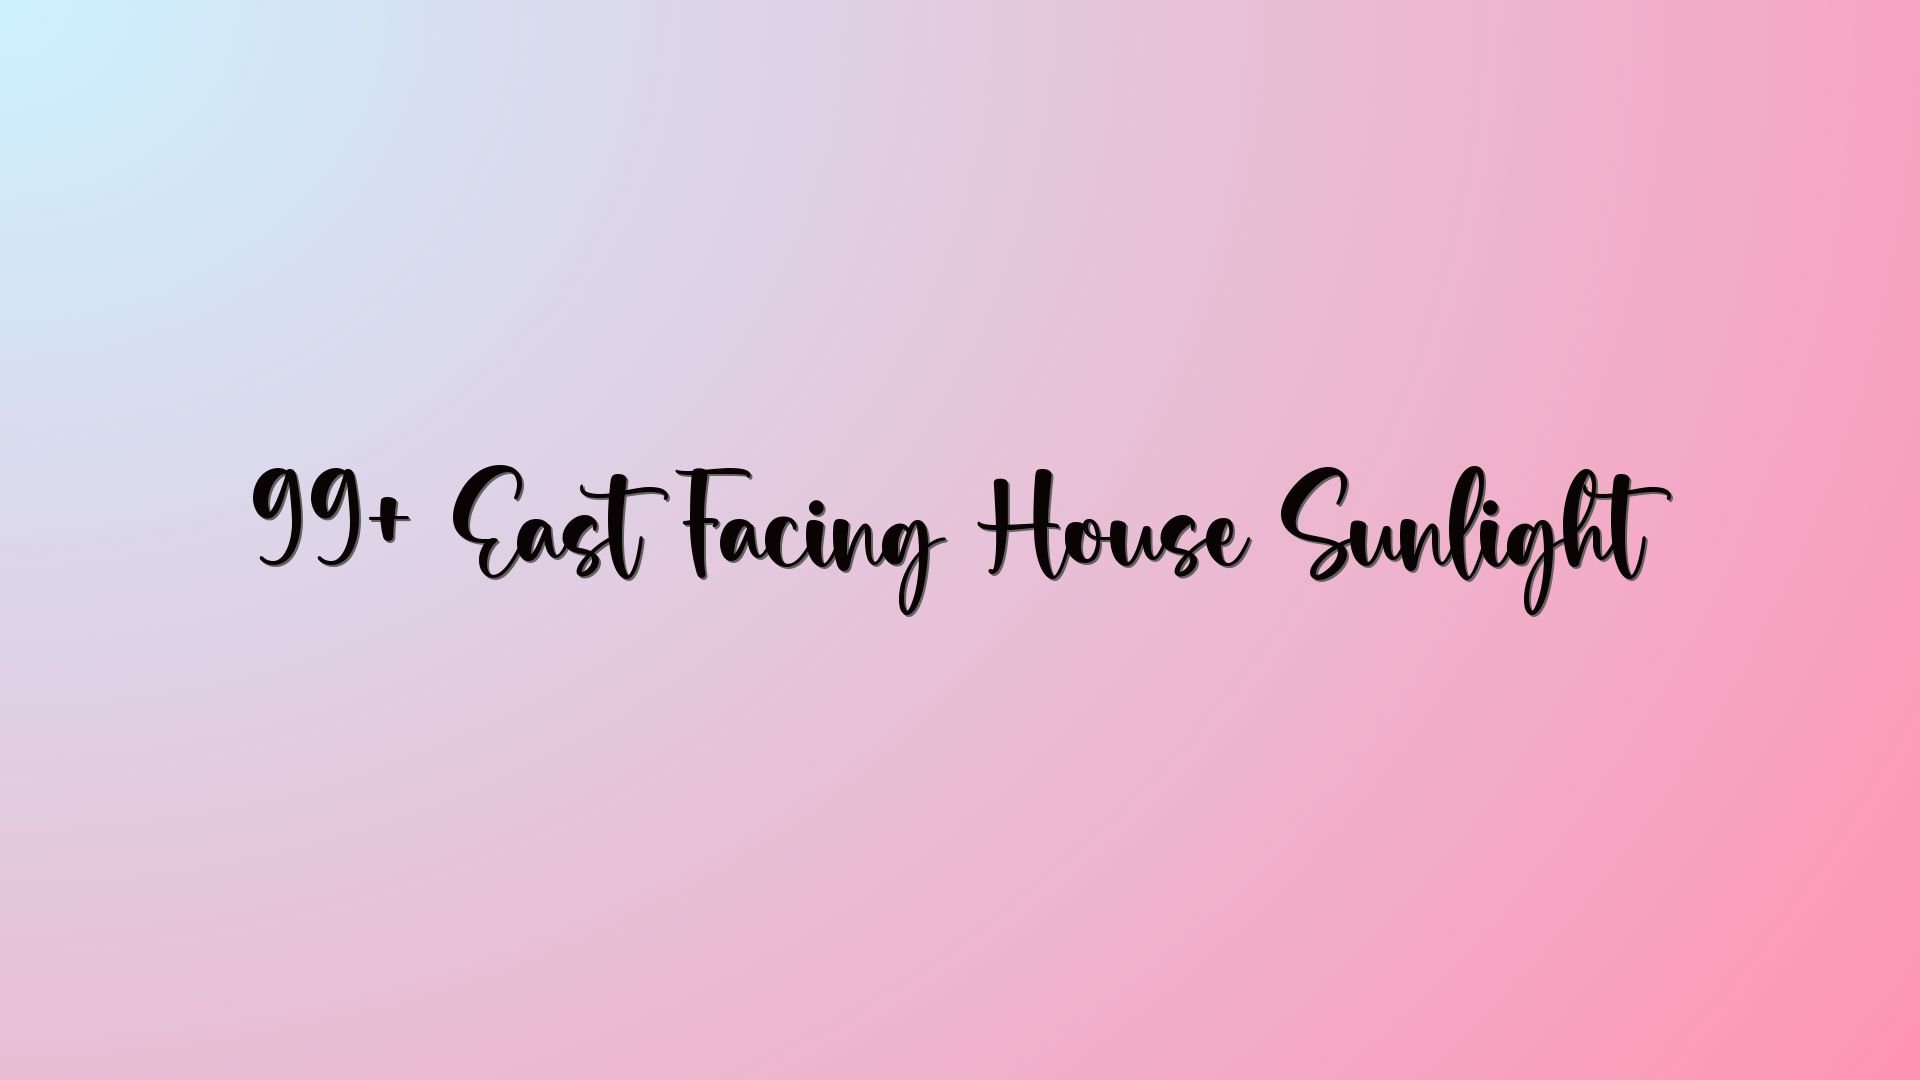 99+ East Facing House Sunlight